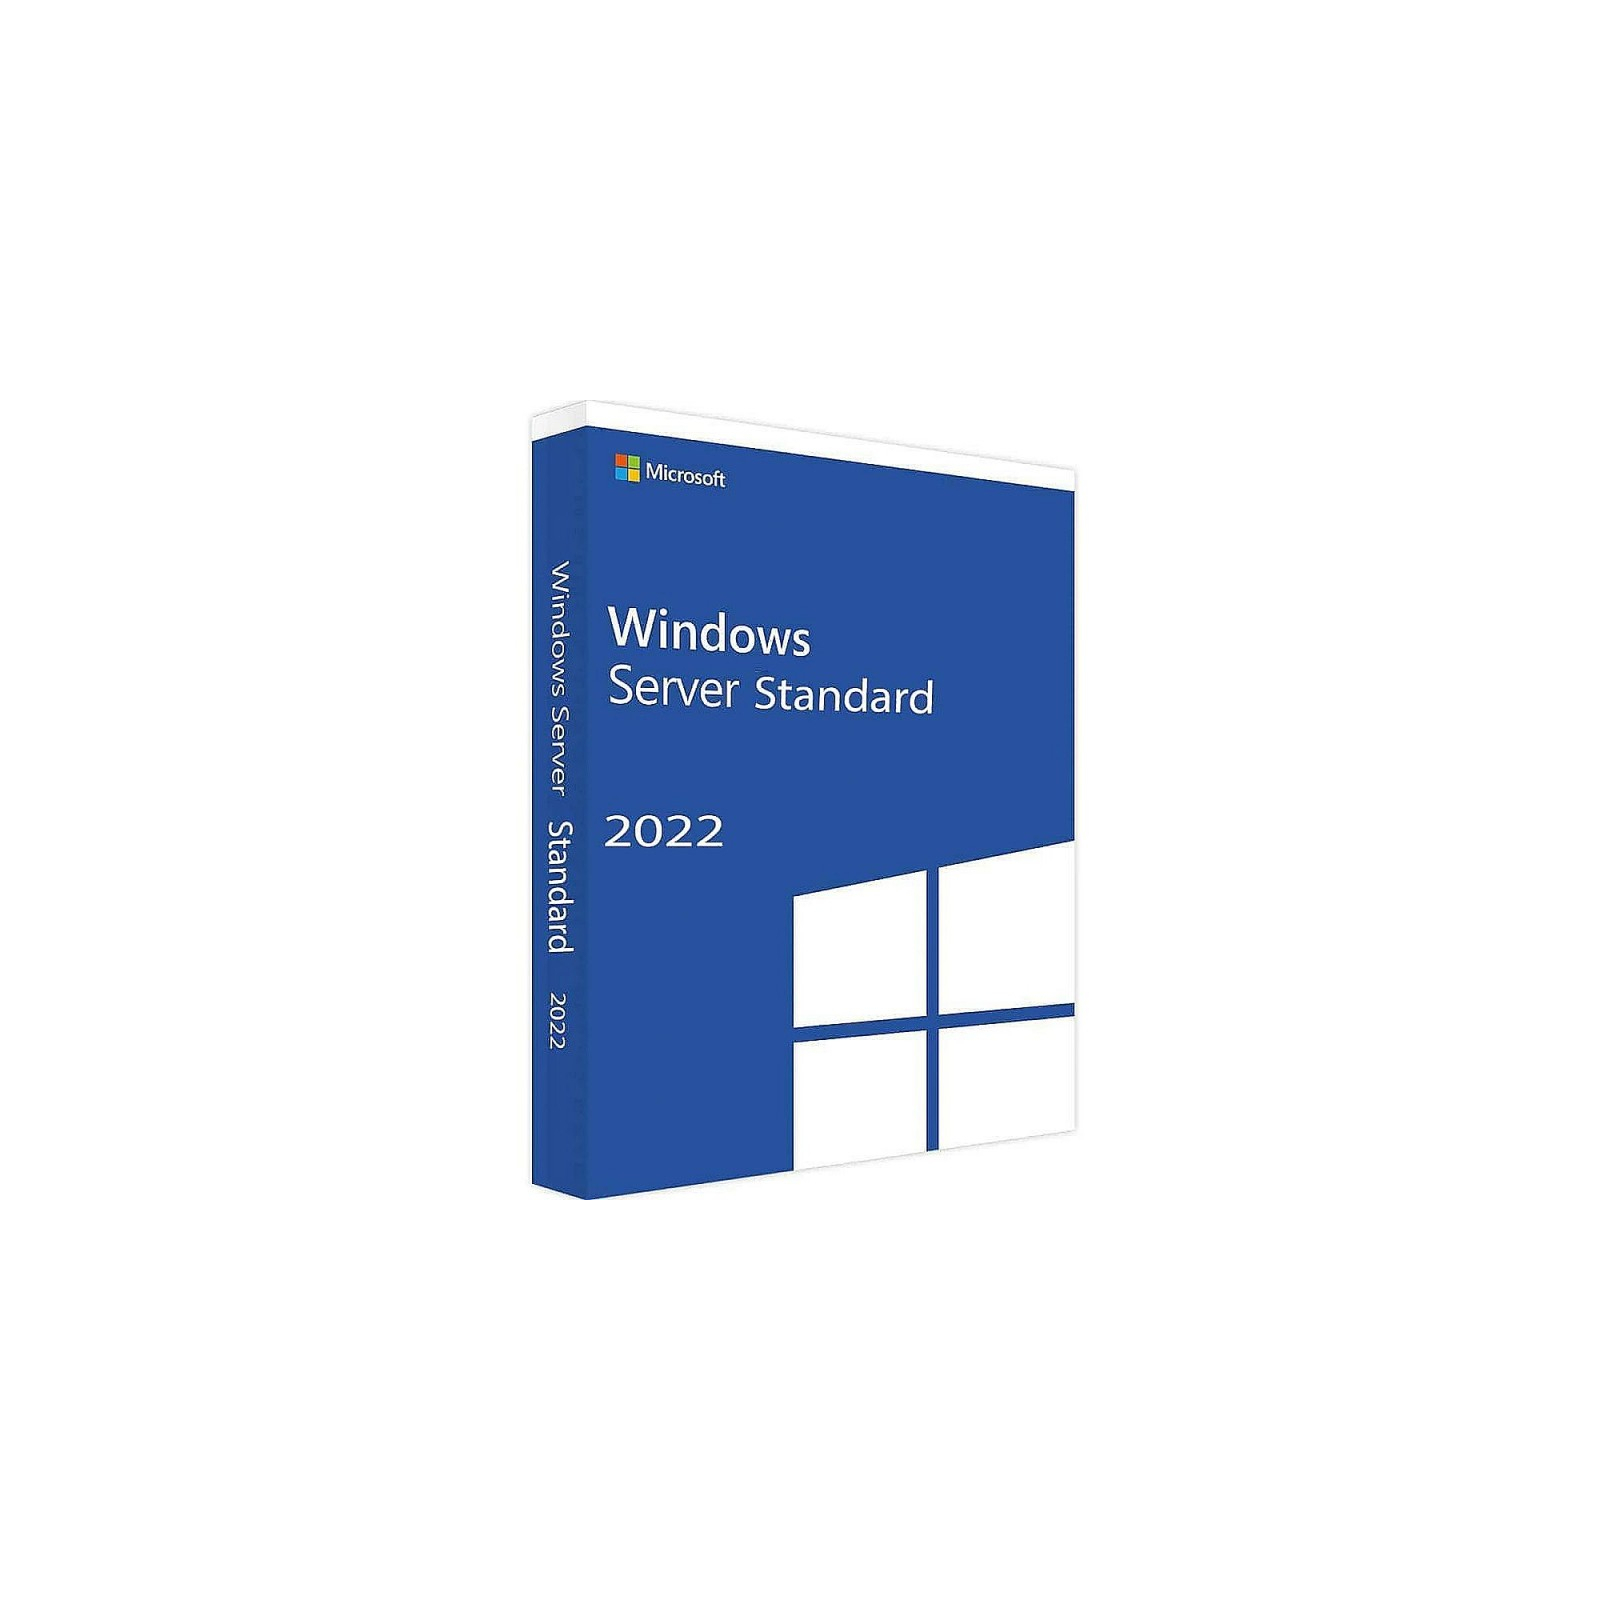 ПО для сервера Dell Windows Server Standart 2022 add license 2 core (634-BYKQ)